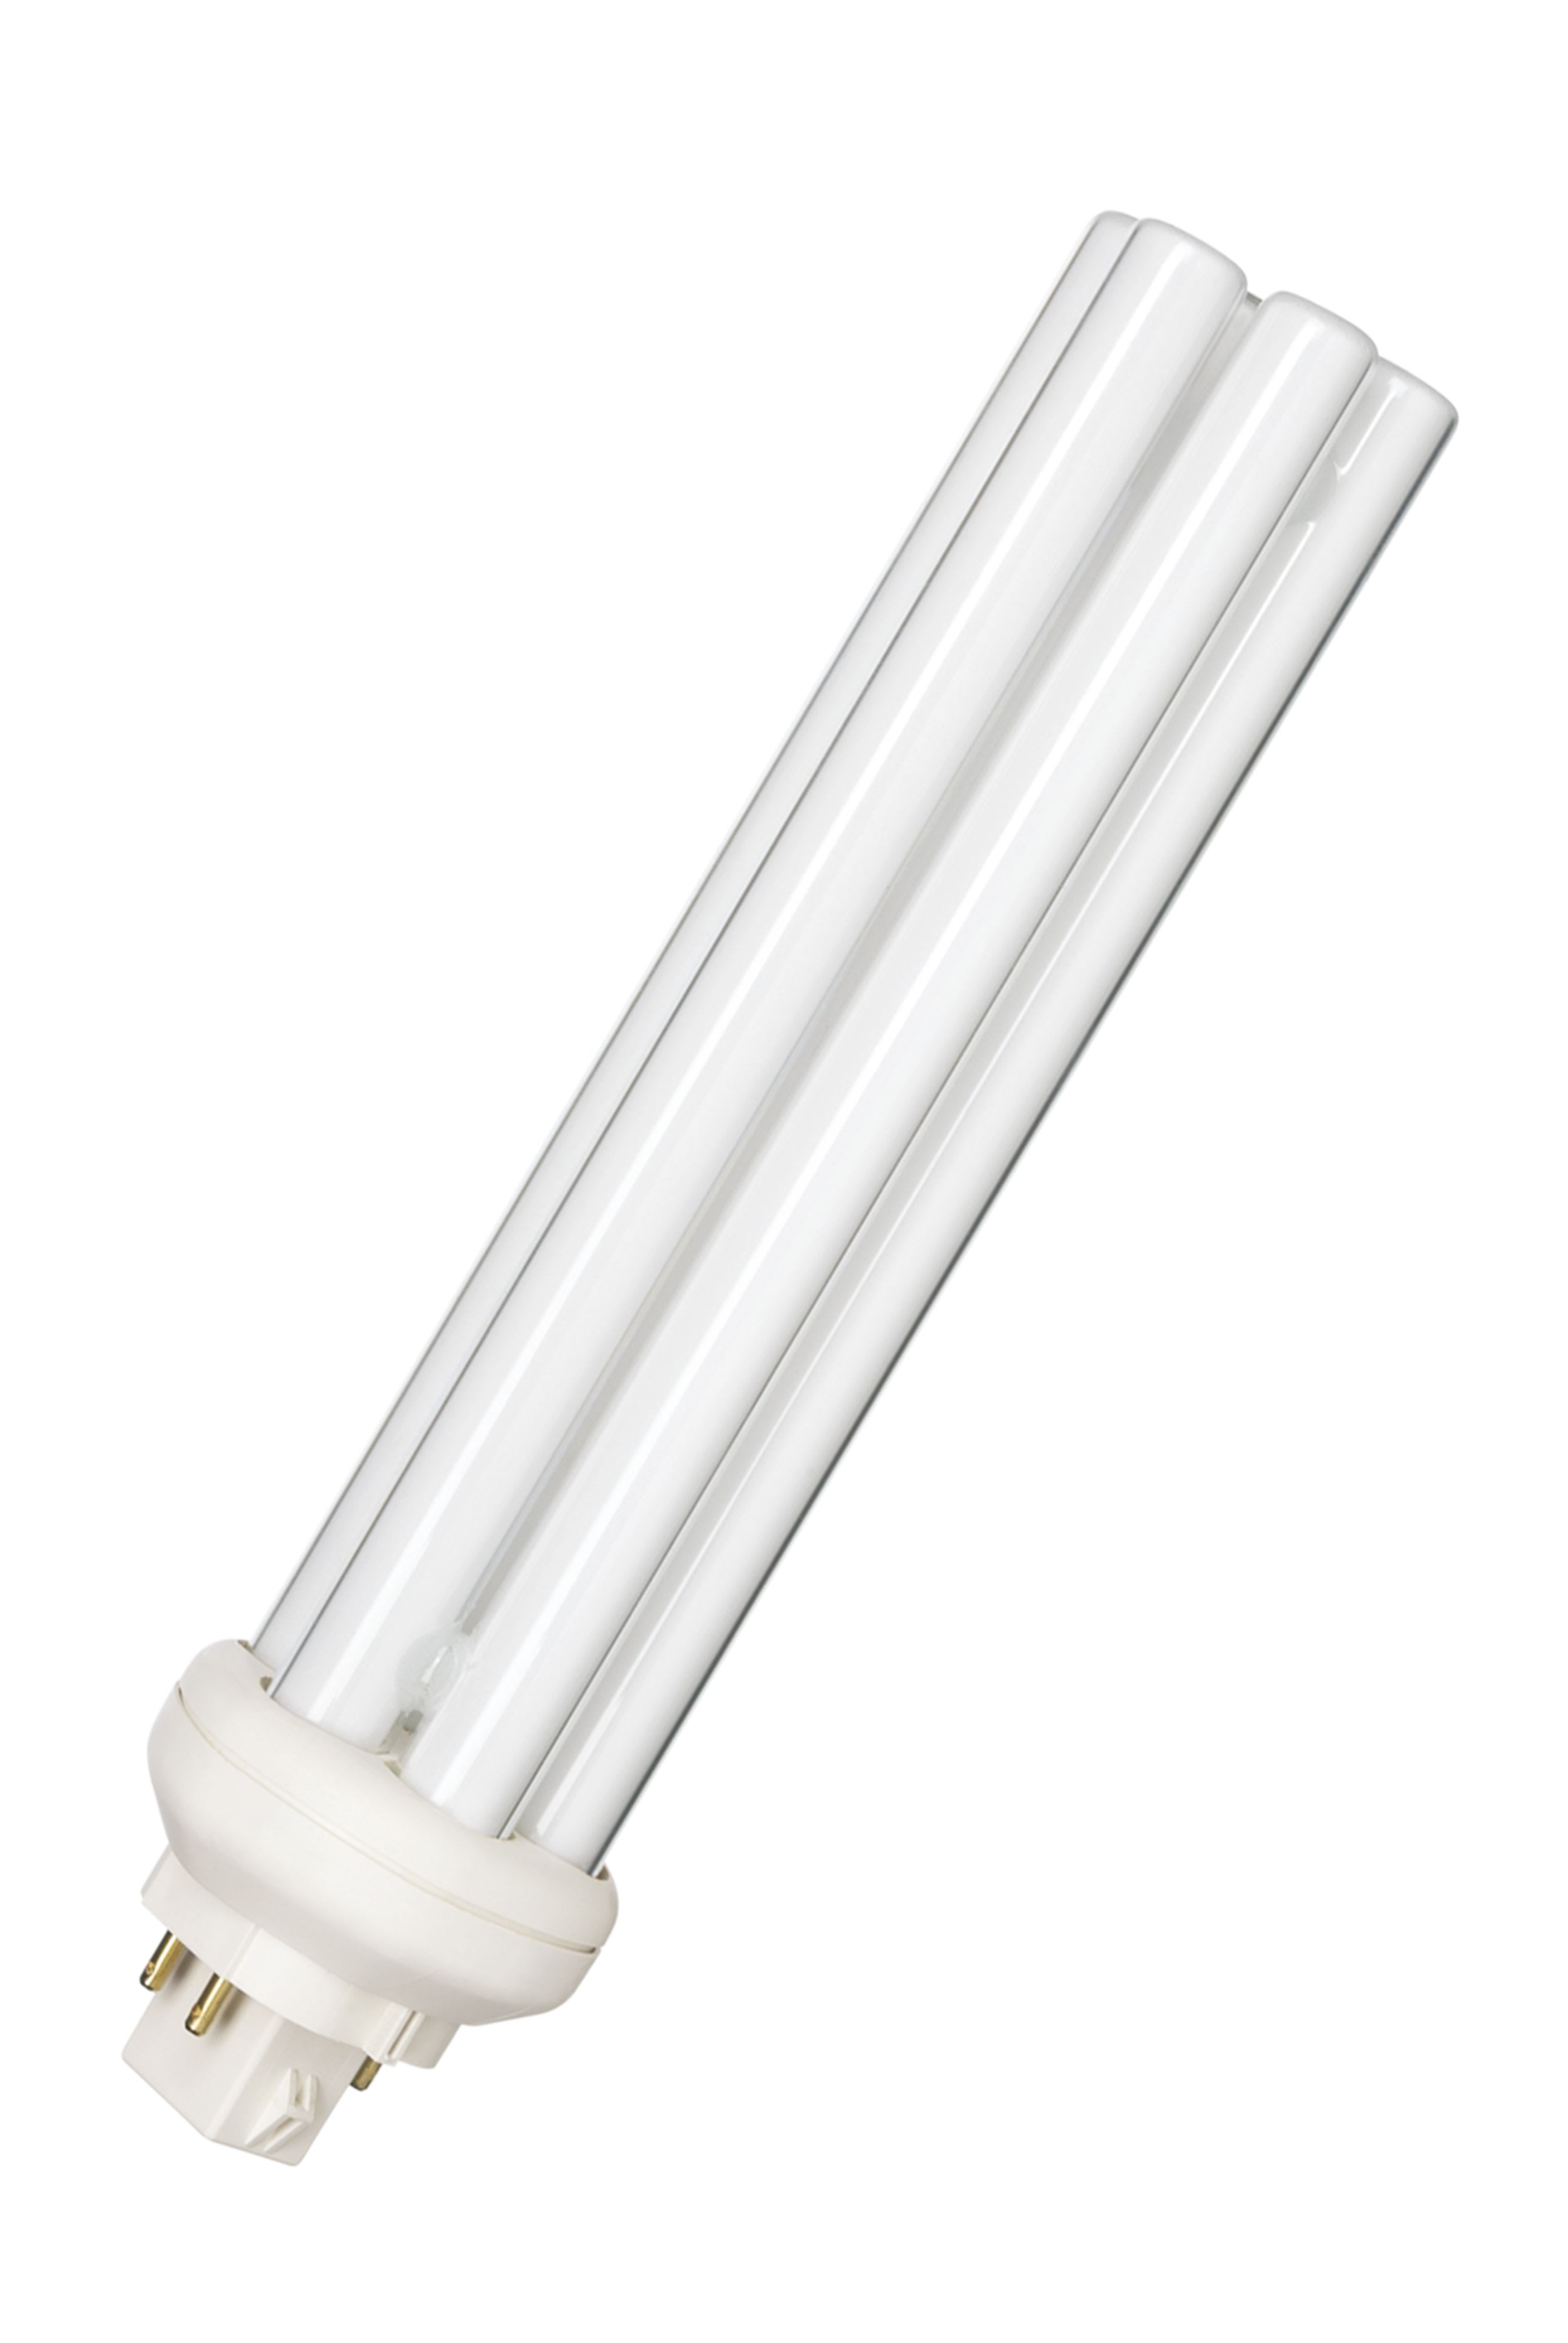 Bailey - PHI Lampe fluocompacte MASTER PL-T 57W/840/4P